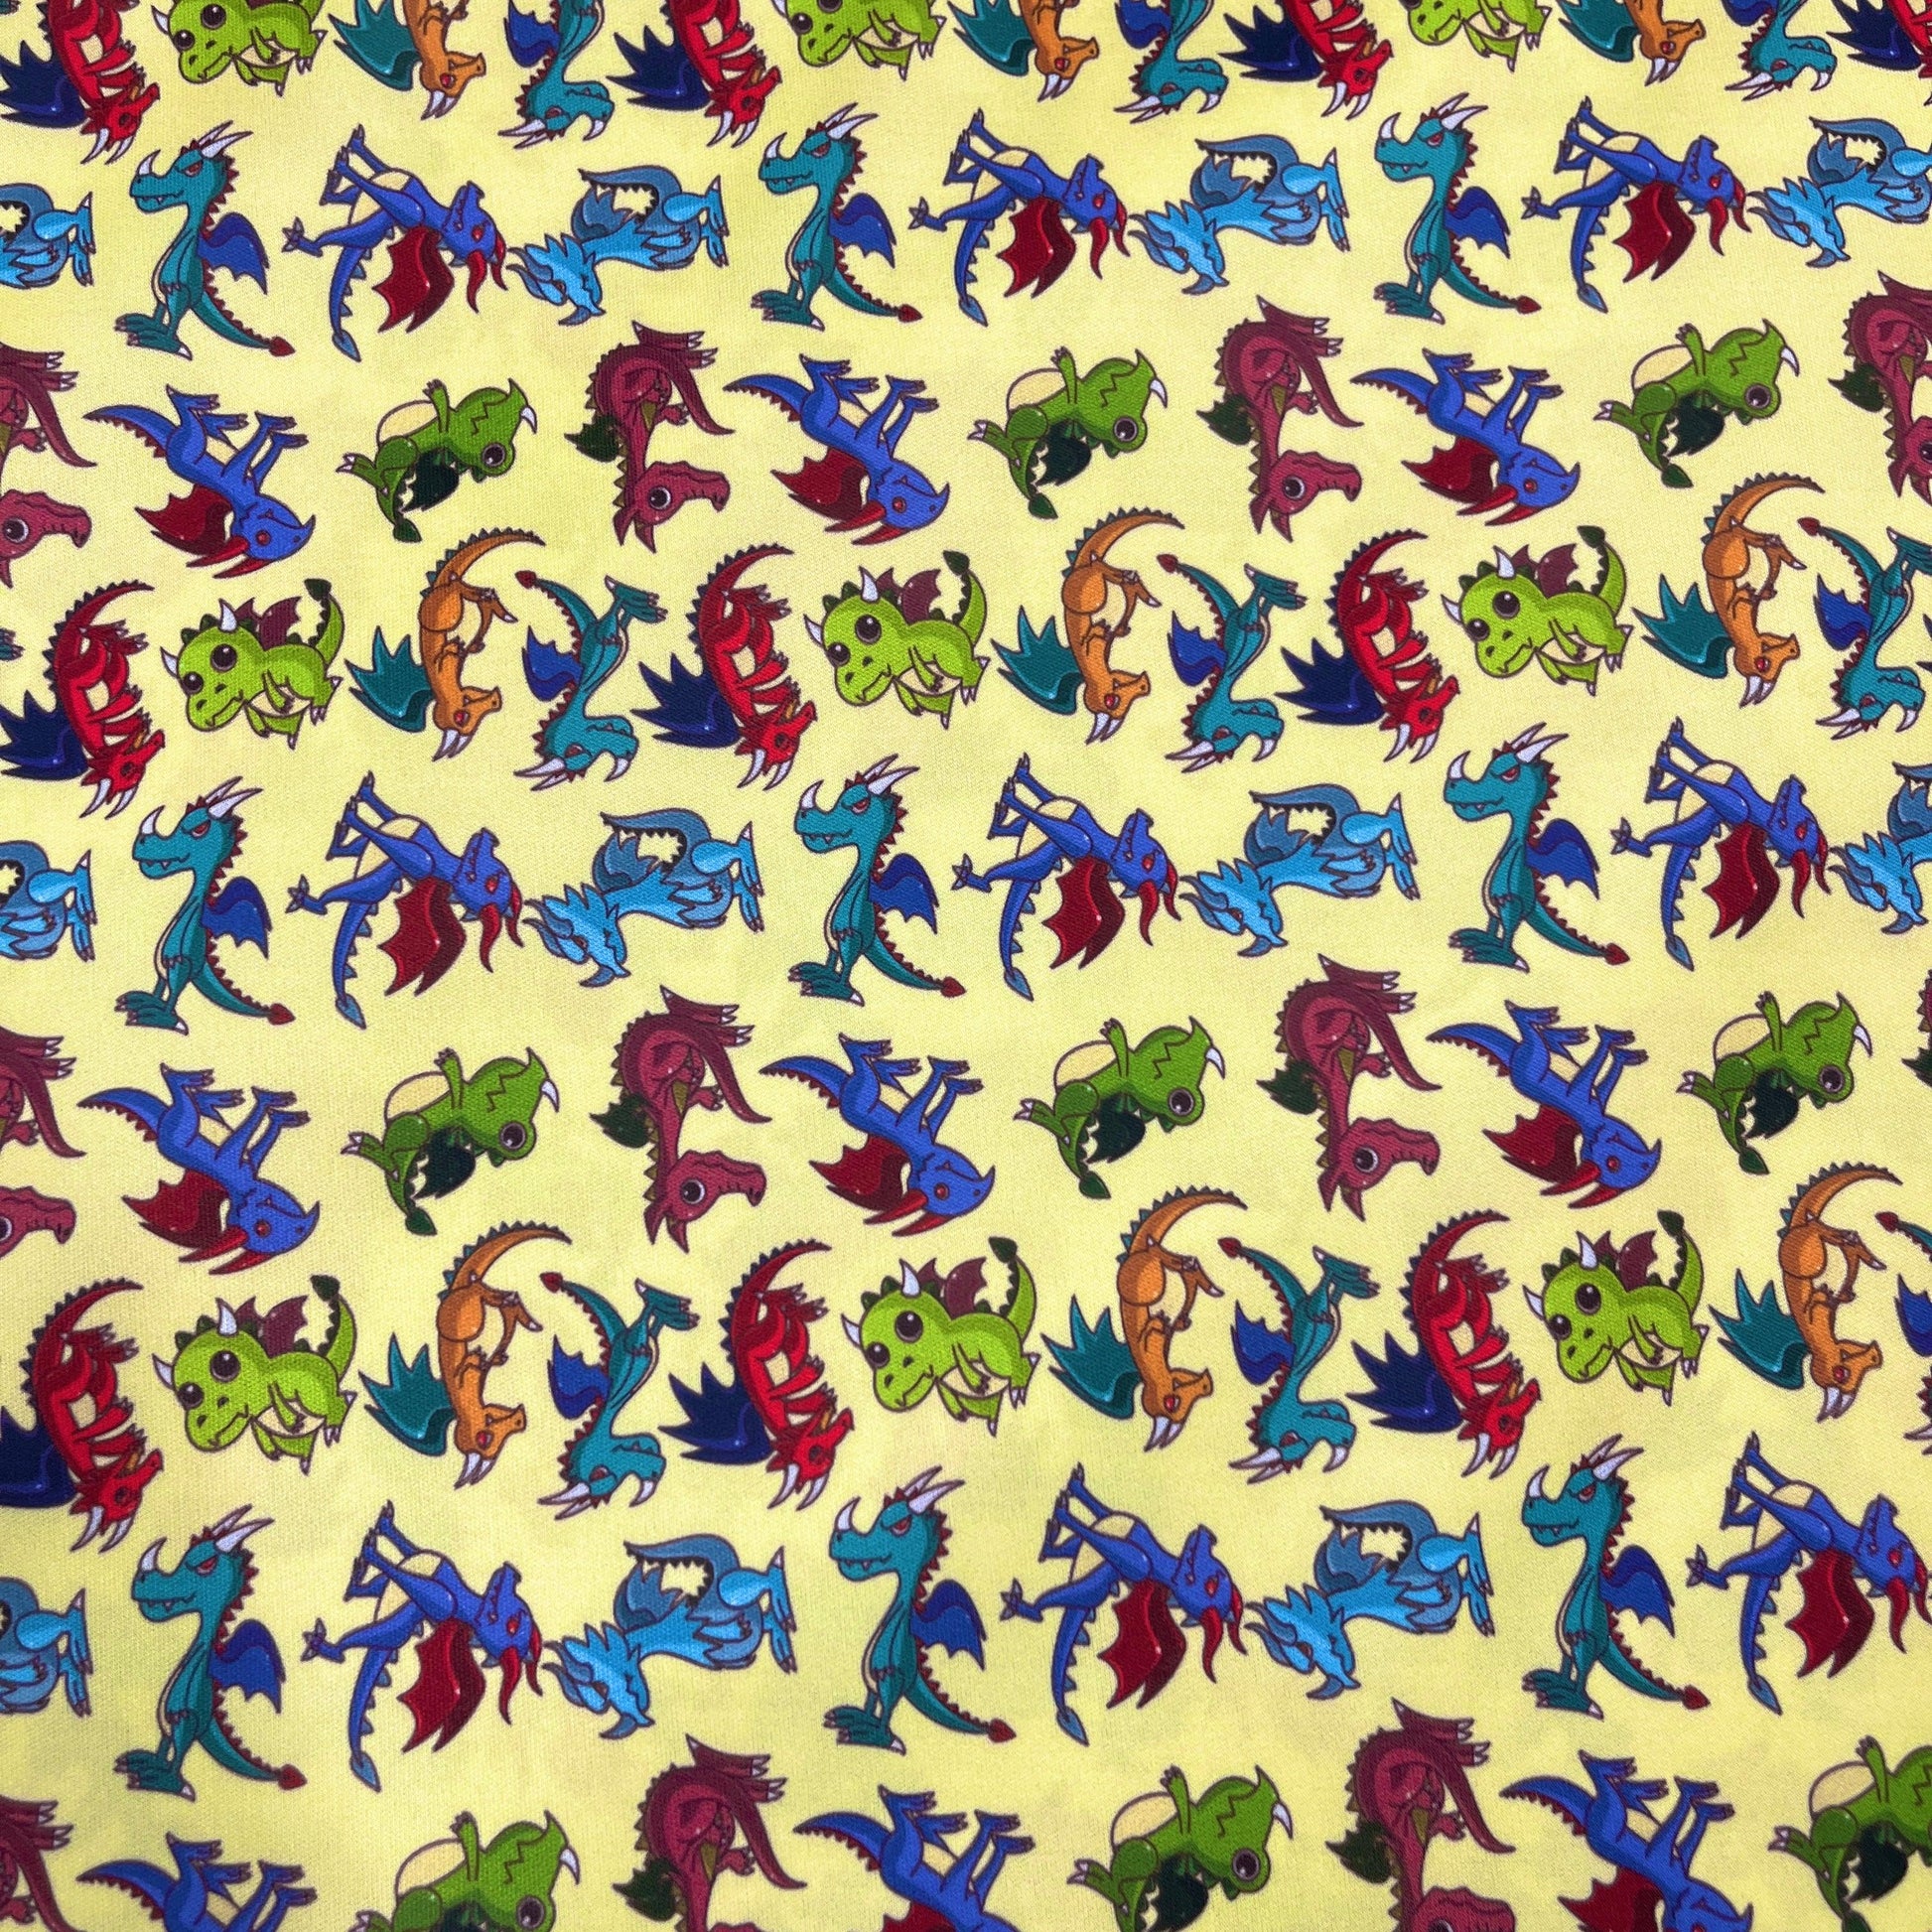 Cartoon Dragon Toss 1 mil PUL Fabric- Made in the USA - Nature's Fabrics